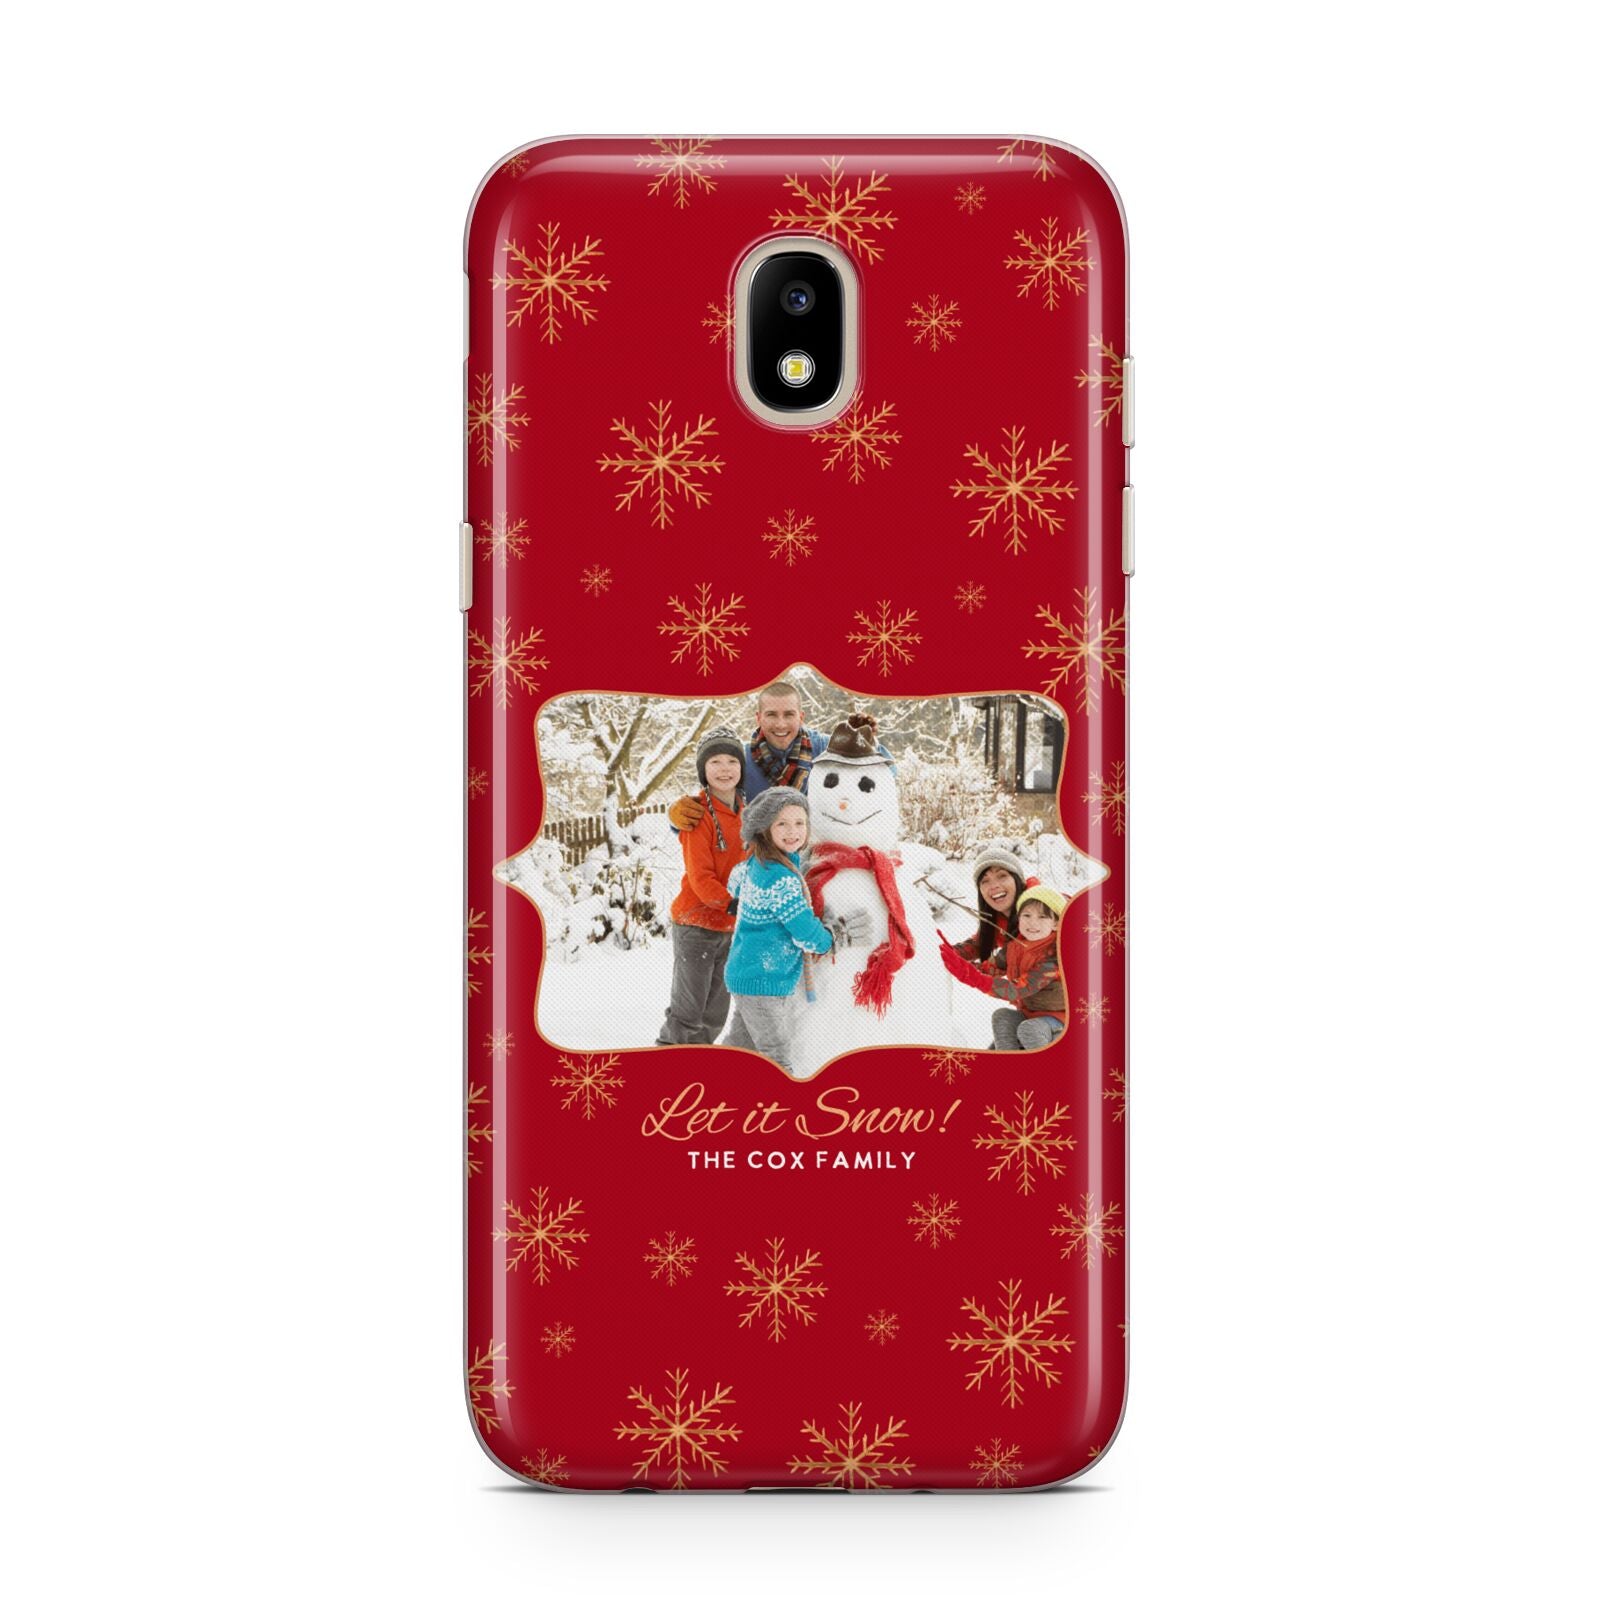 Let it Snow Christmas Photo Upload Samsung J5 2017 Case